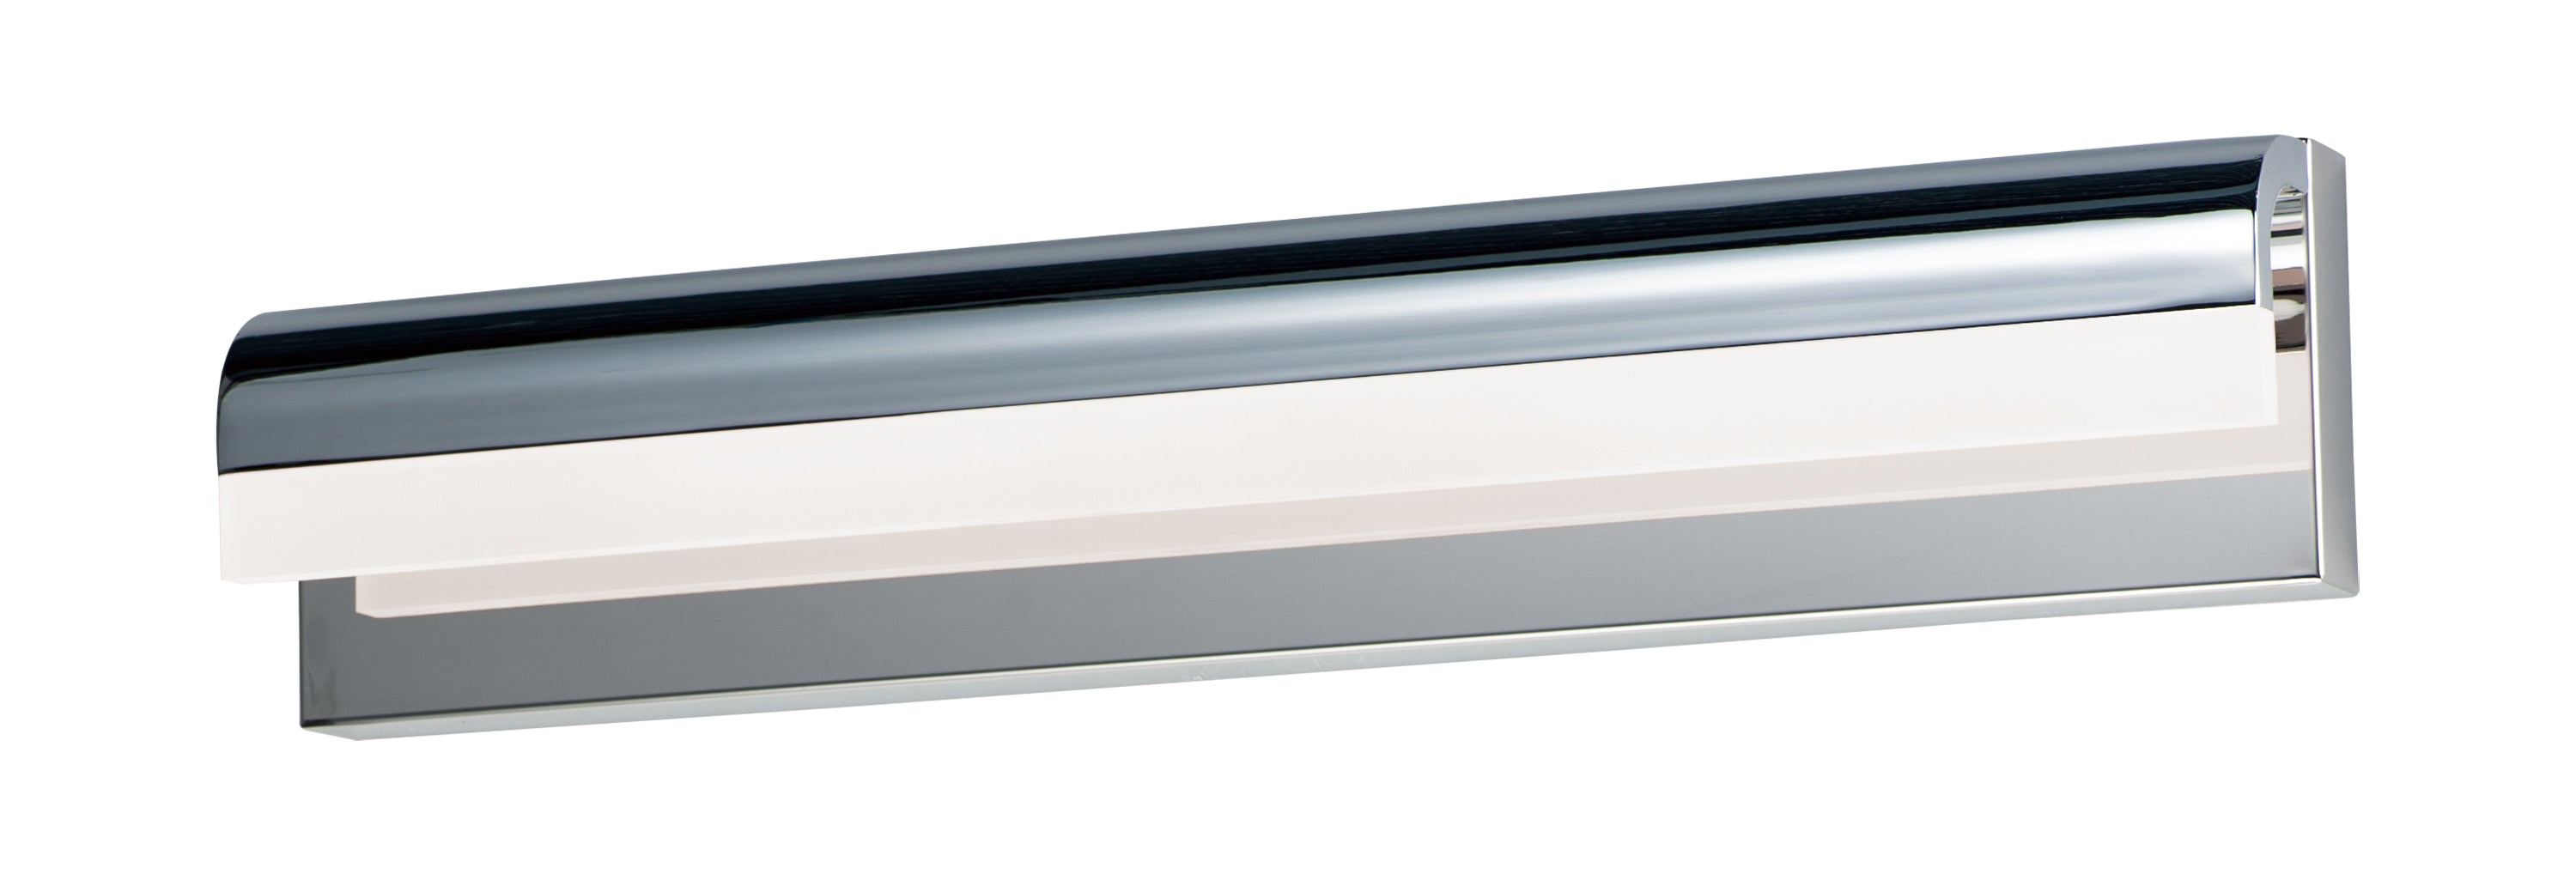 WATERFALL Bathroom sconce Chrome INTEGRATED LED - E24844-90PC | MAXIM/ET2